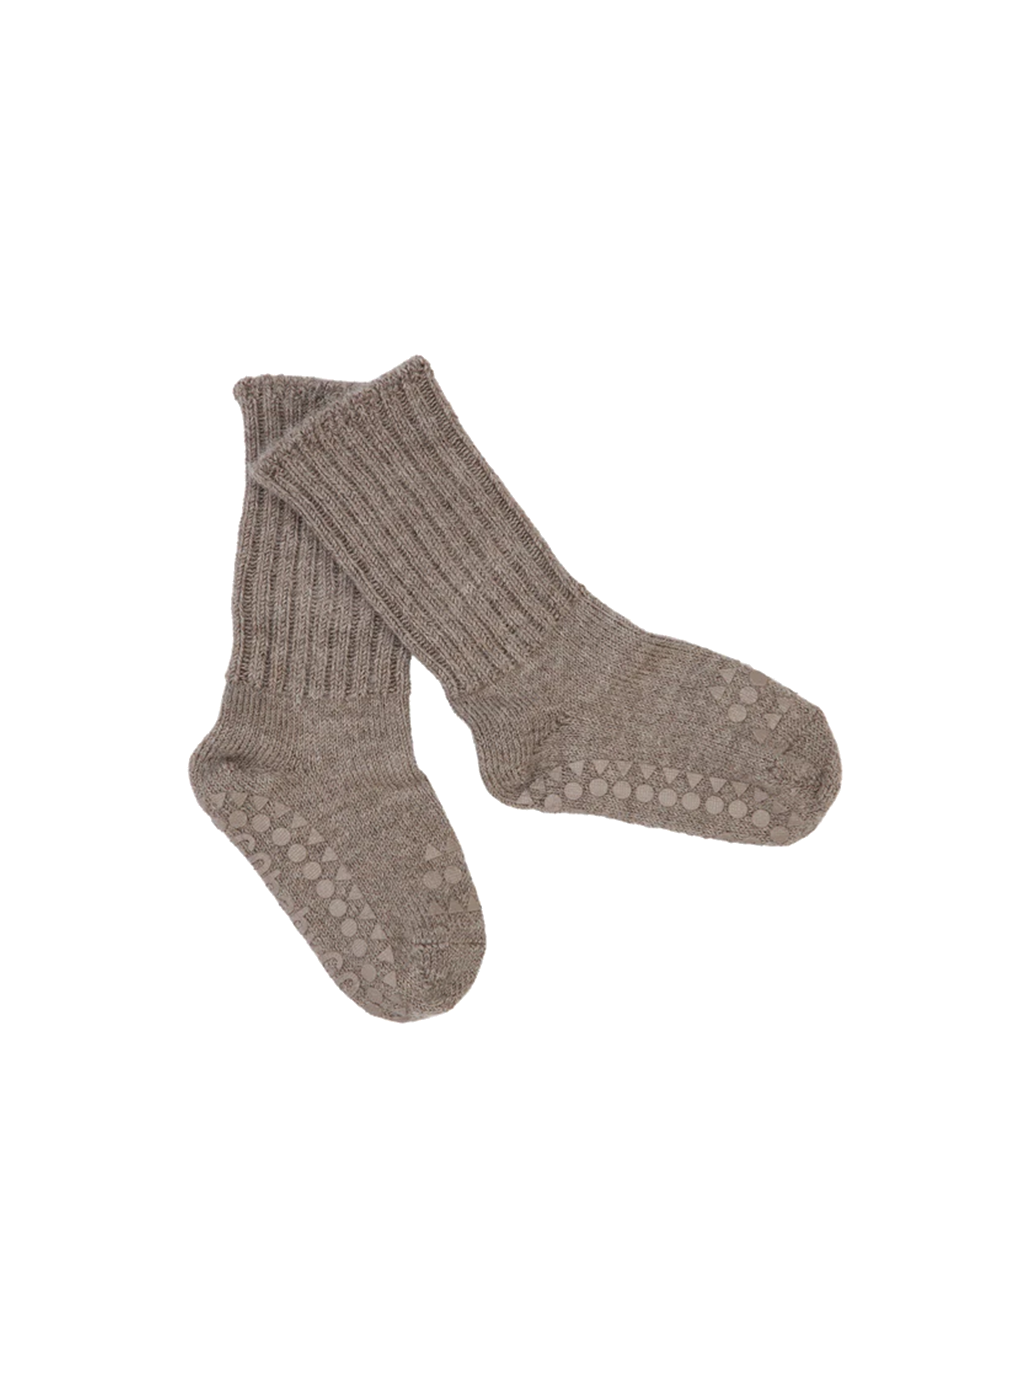 chaussettes antidérapantes en alpaga